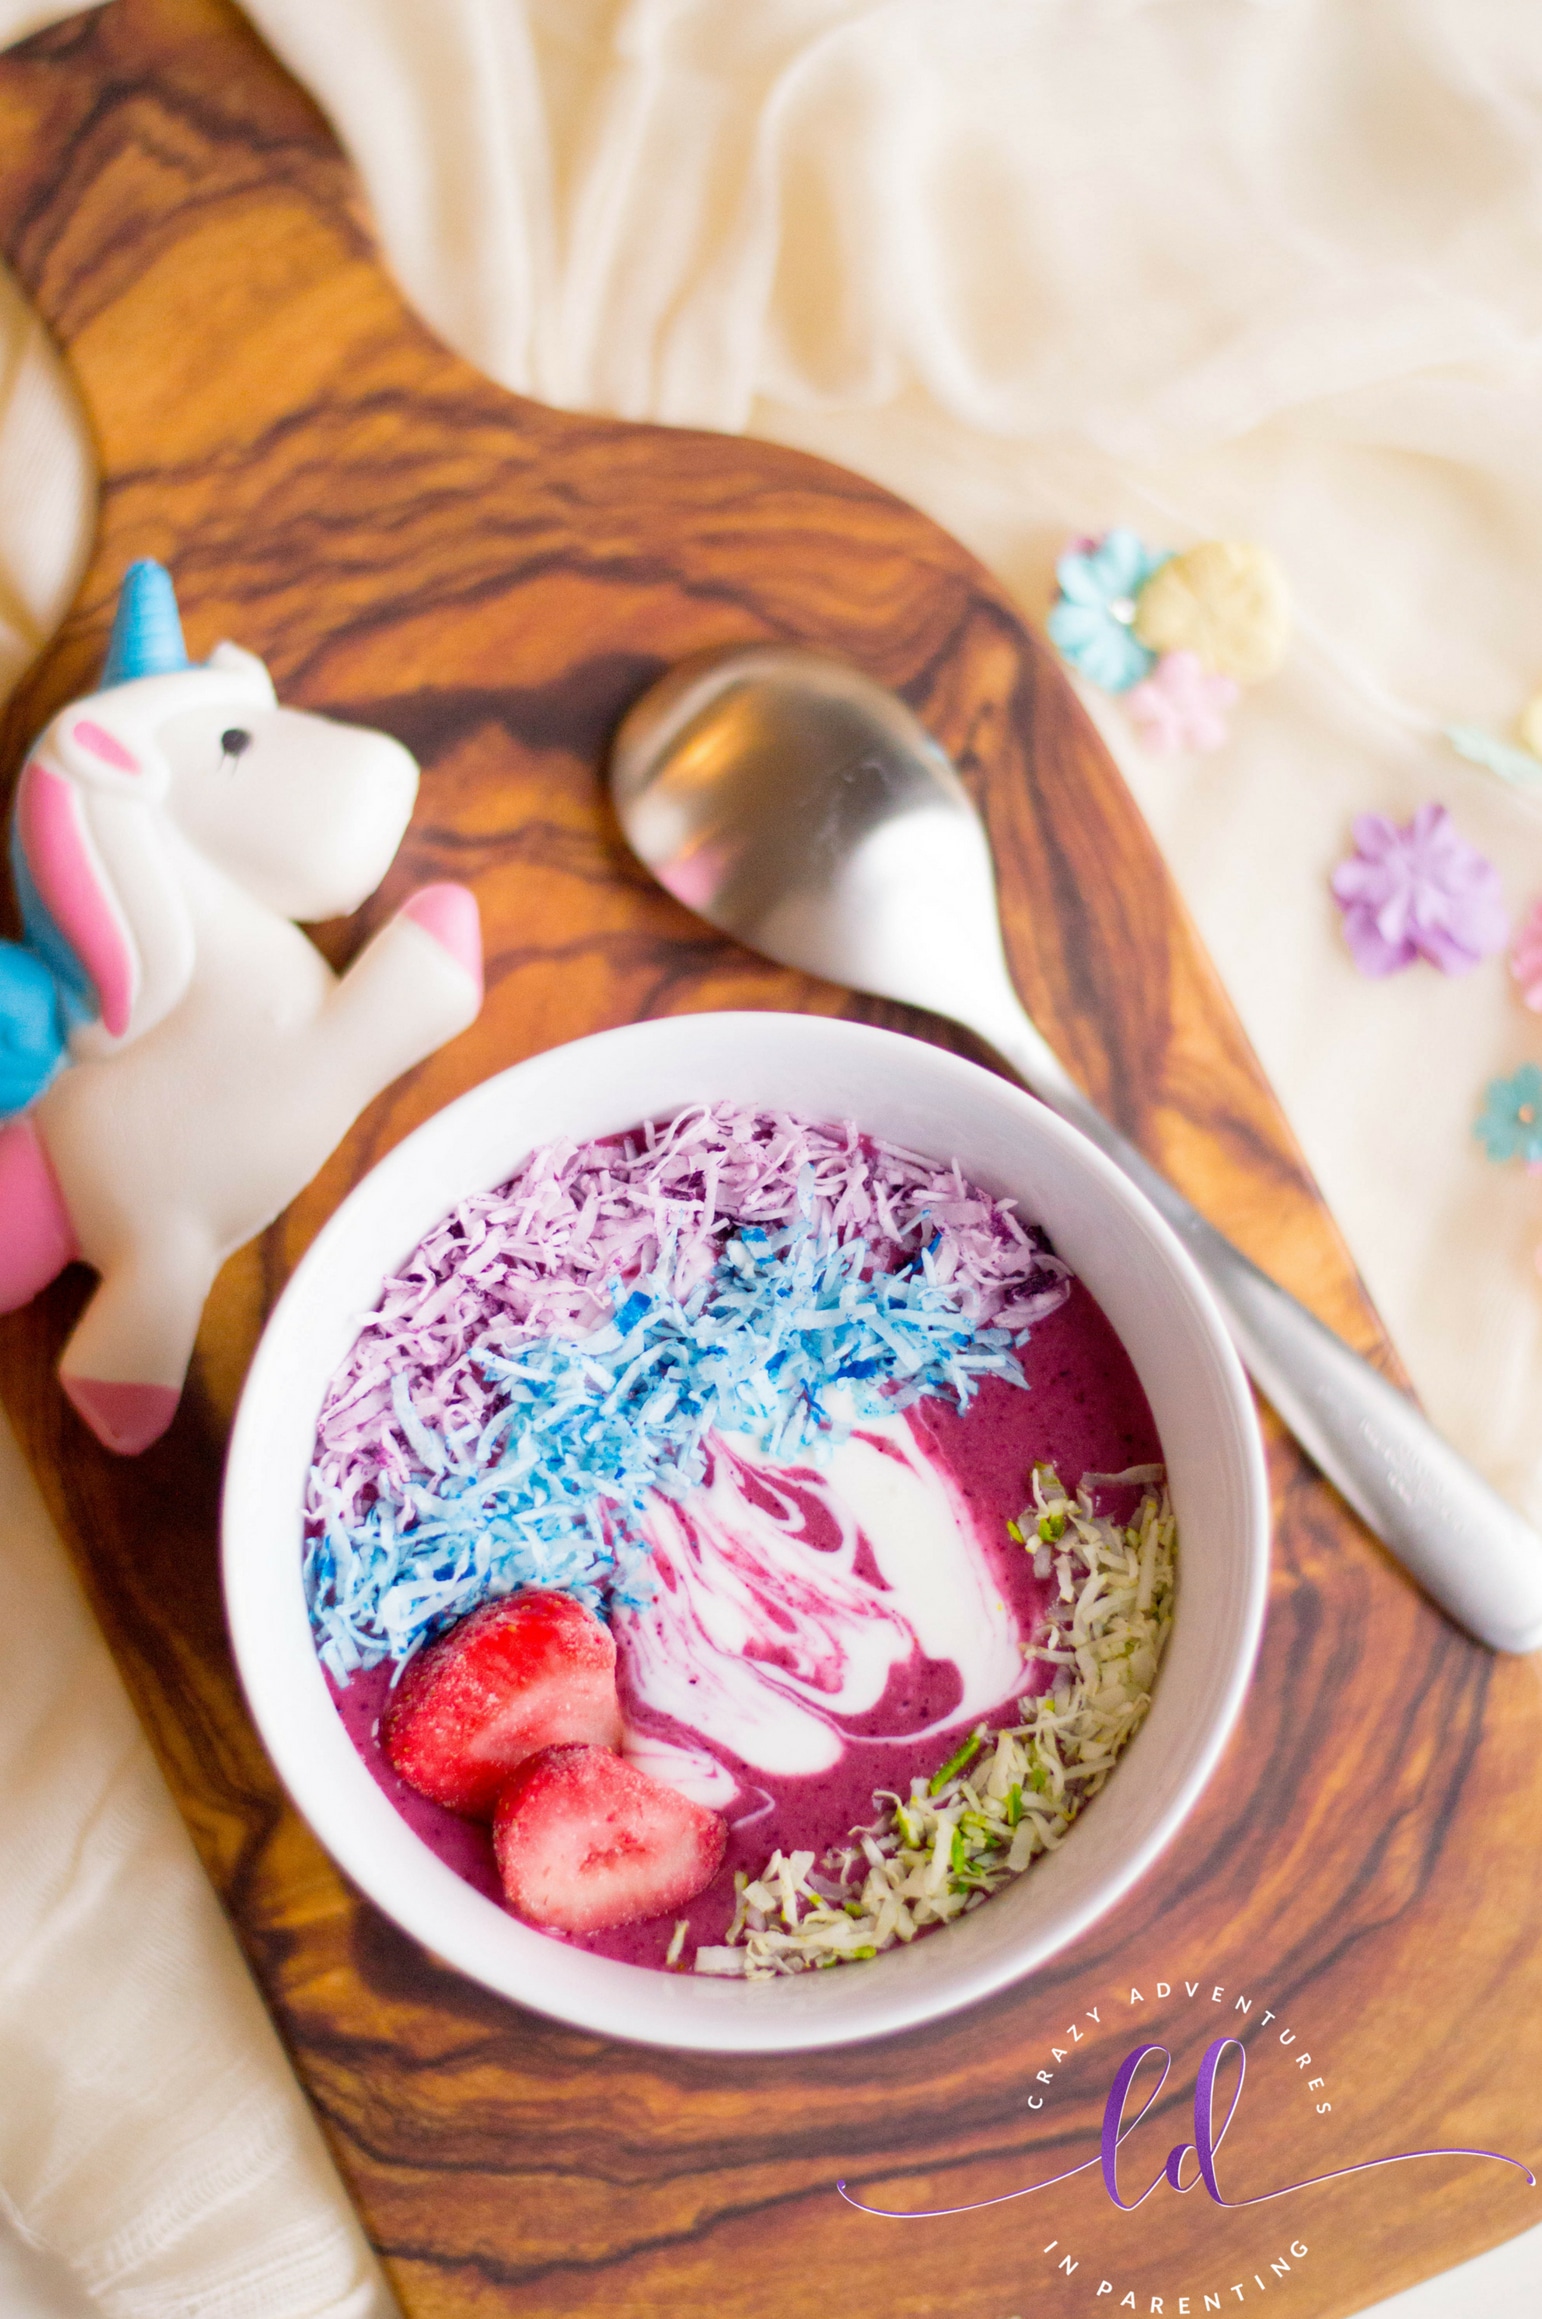 How to make unicorn smoothie bowls